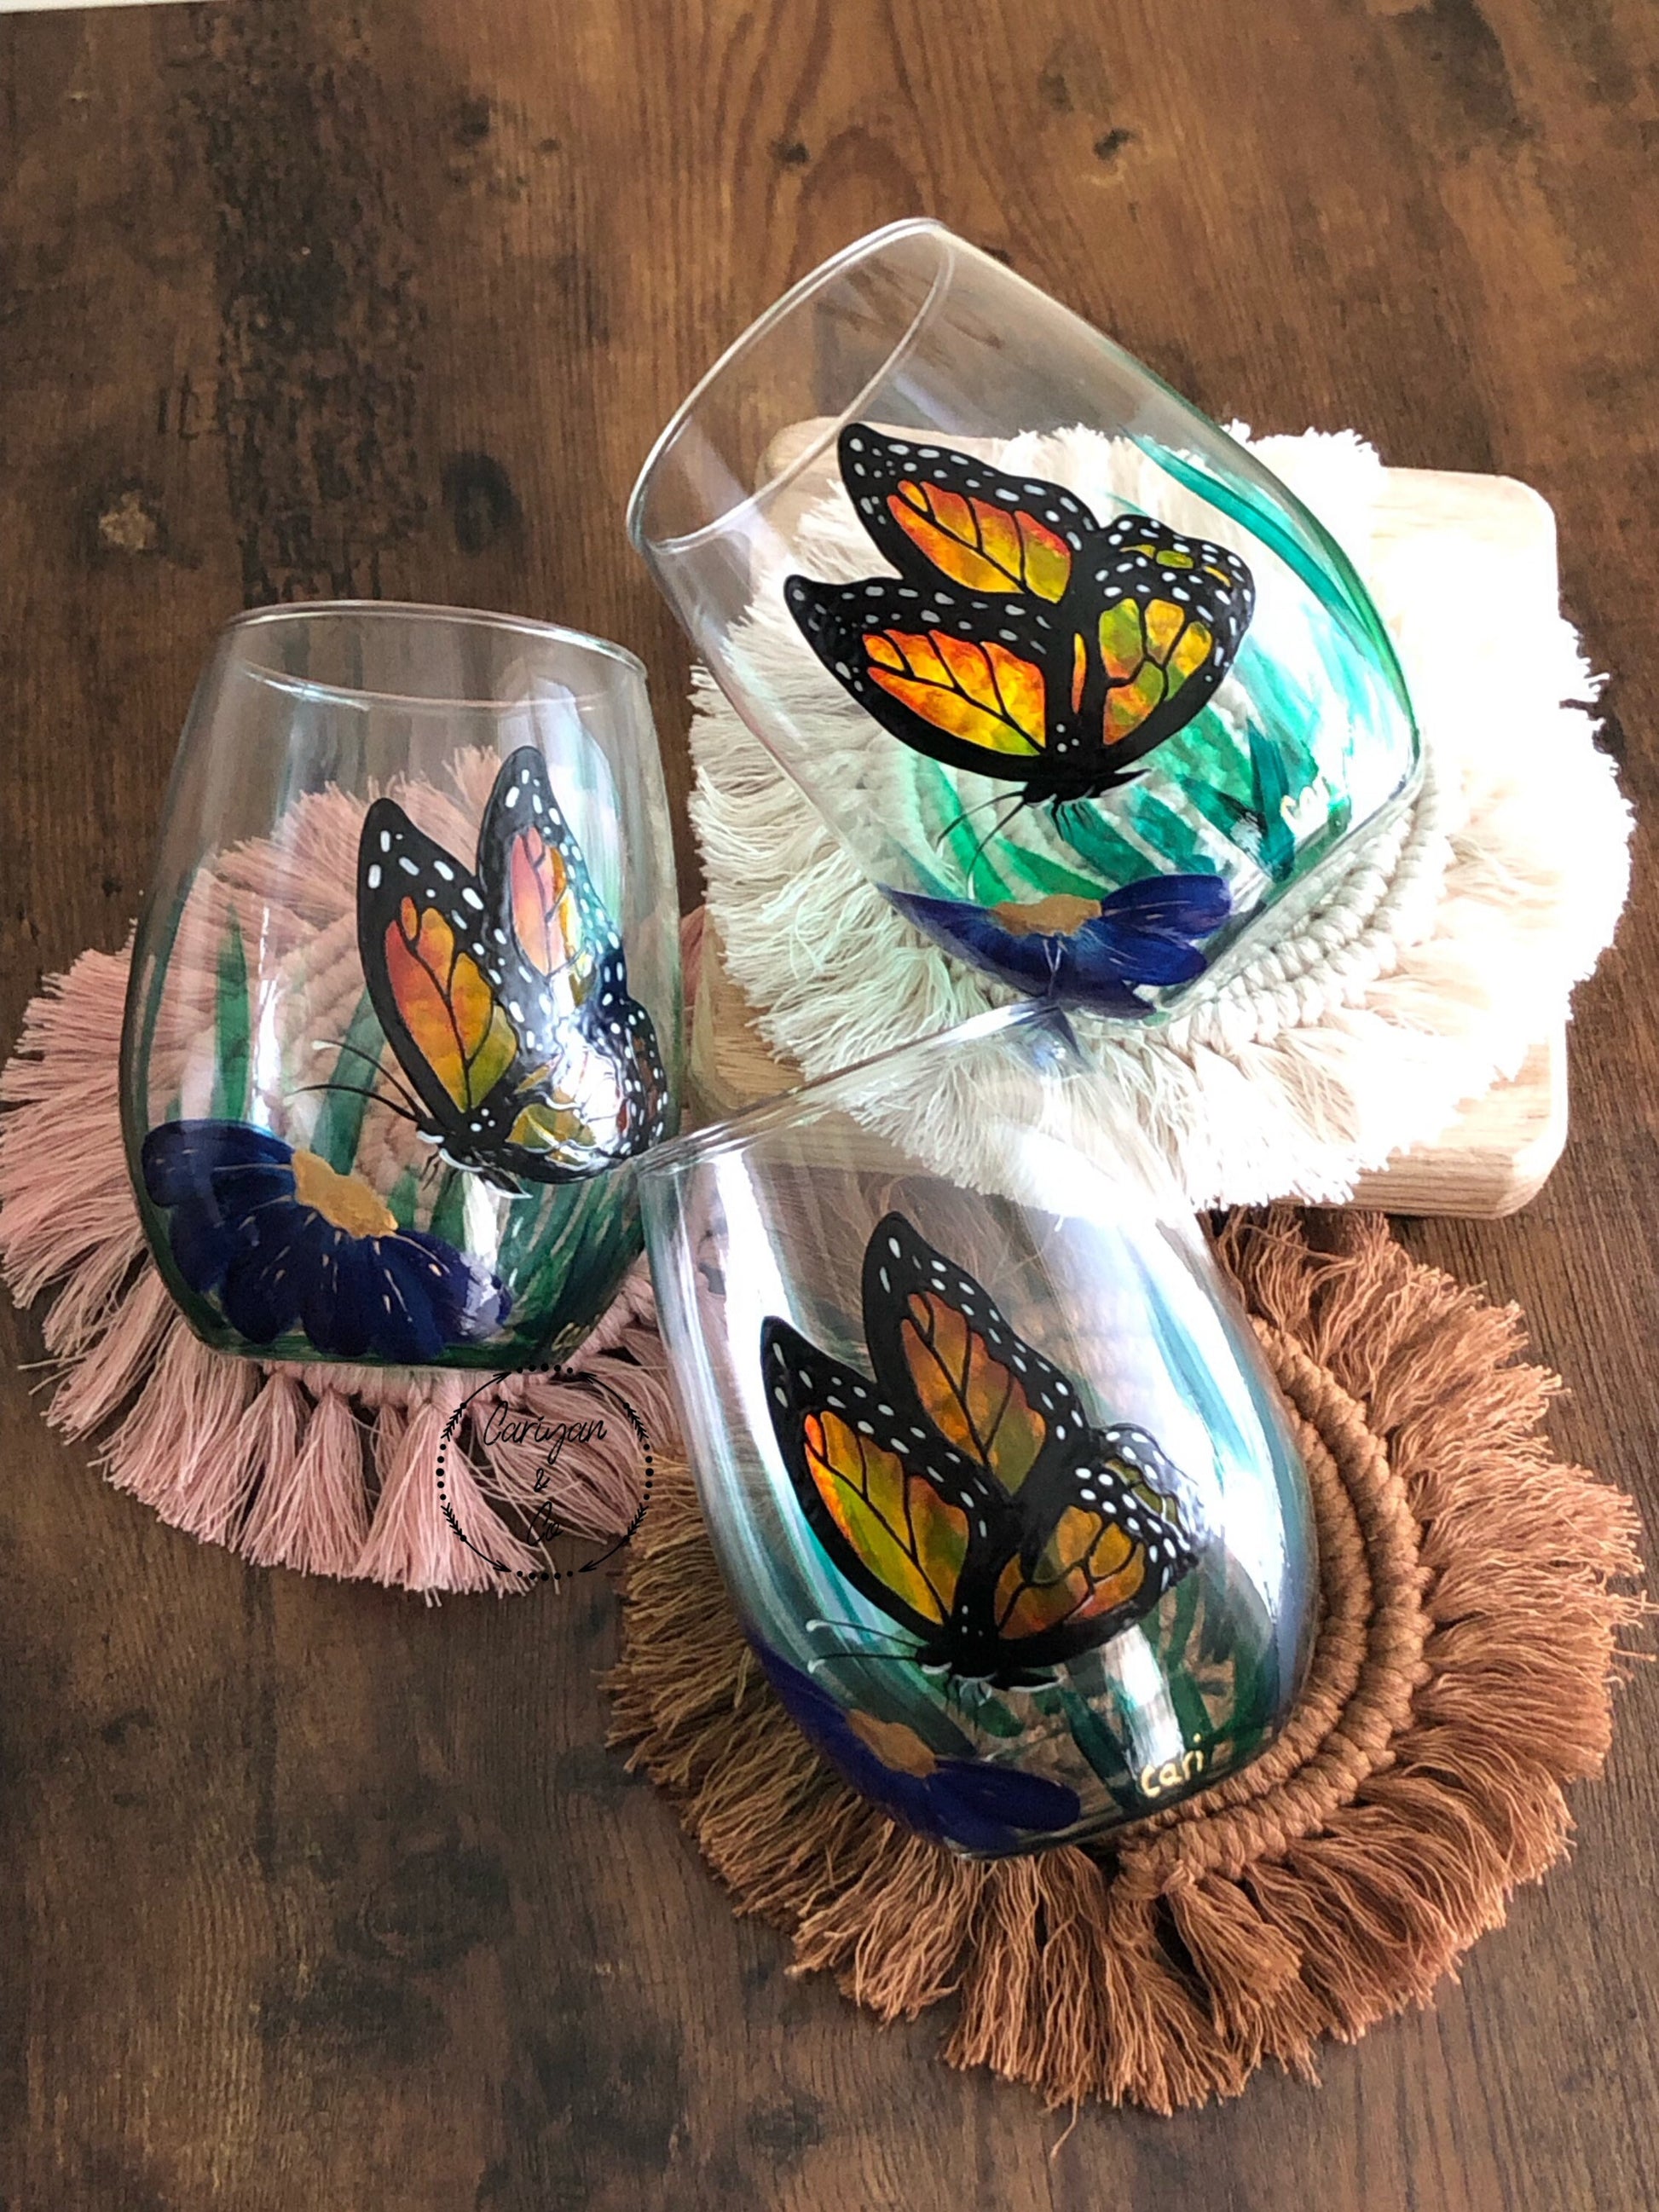 Hand Painted Flower Wine Glasses 